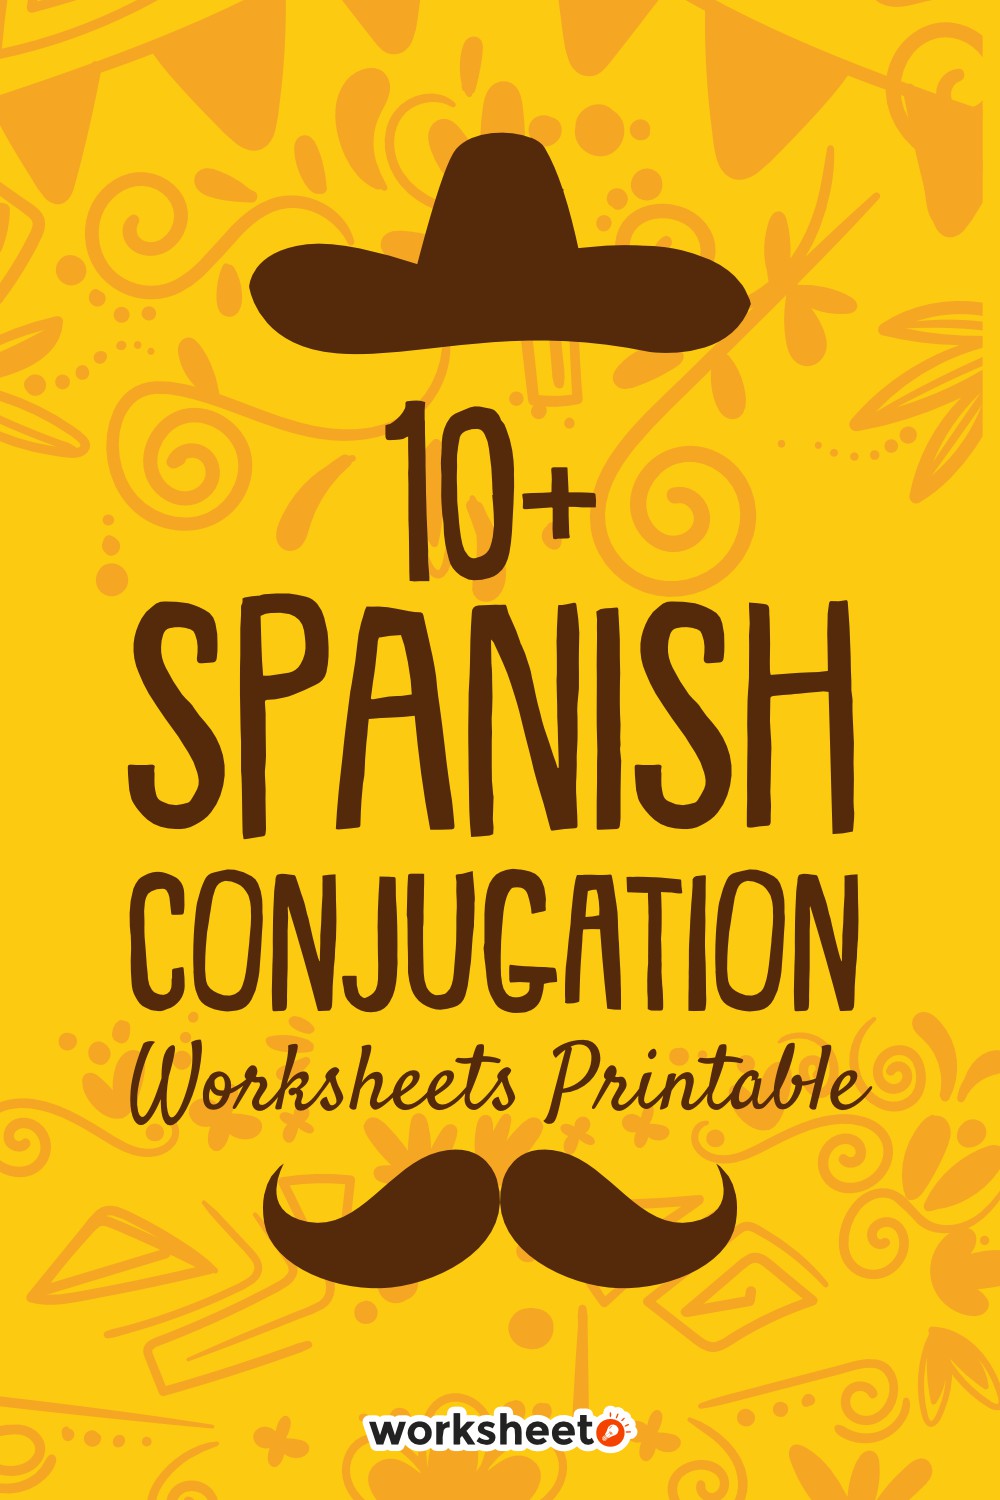 17 Images of Spanish Conjugation Worksheets Printable